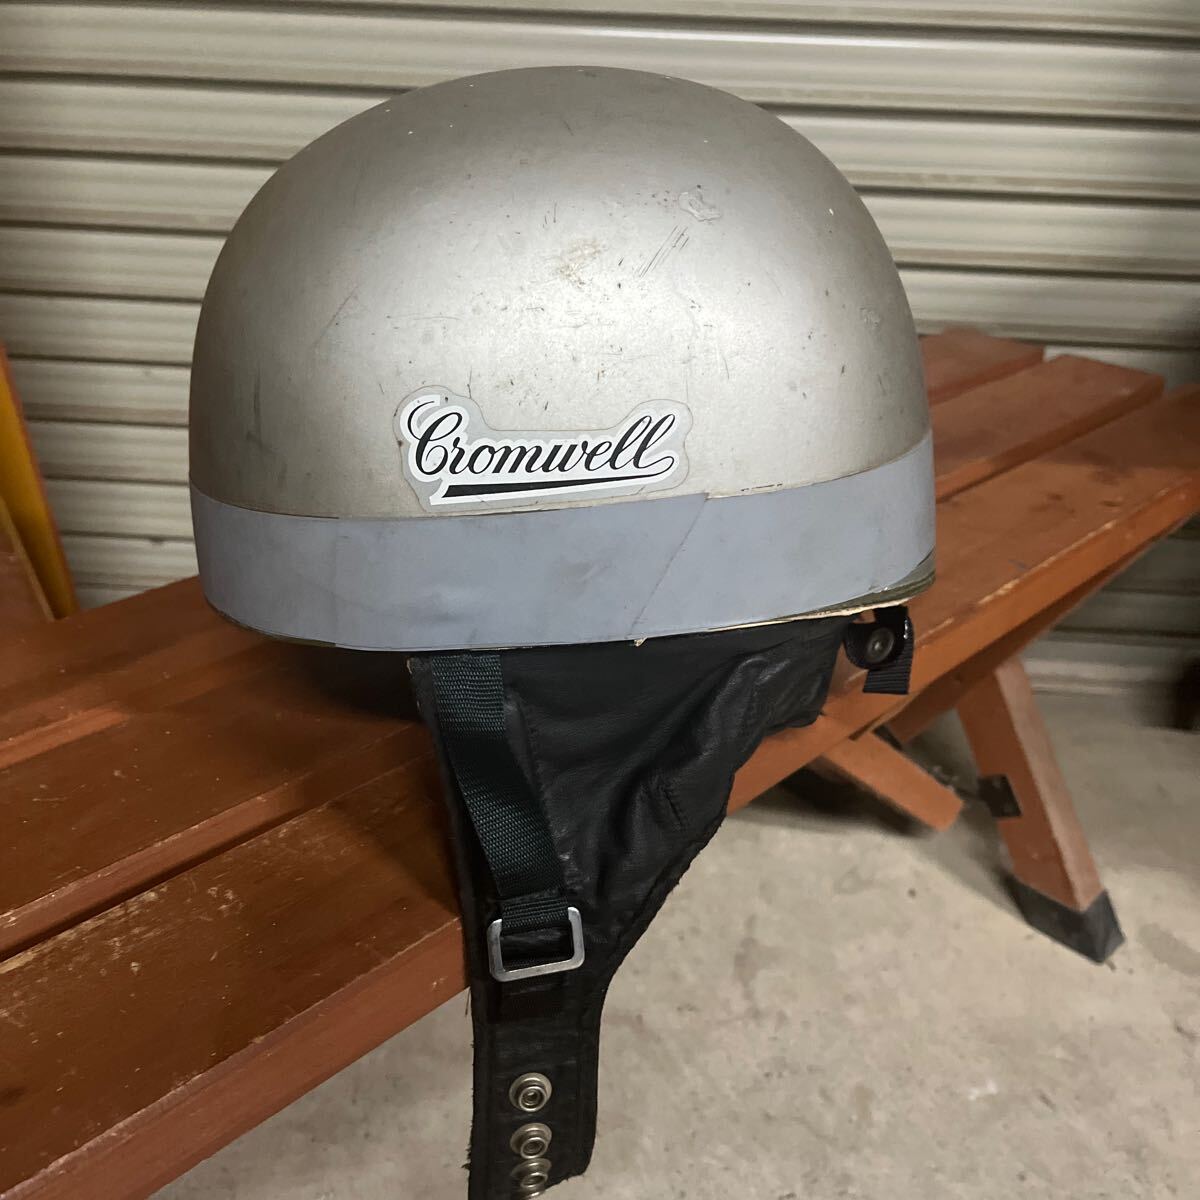  Chrome well helmet cromwell 58cm 7 1/4 triumph bsa norton cb72 cb250ex